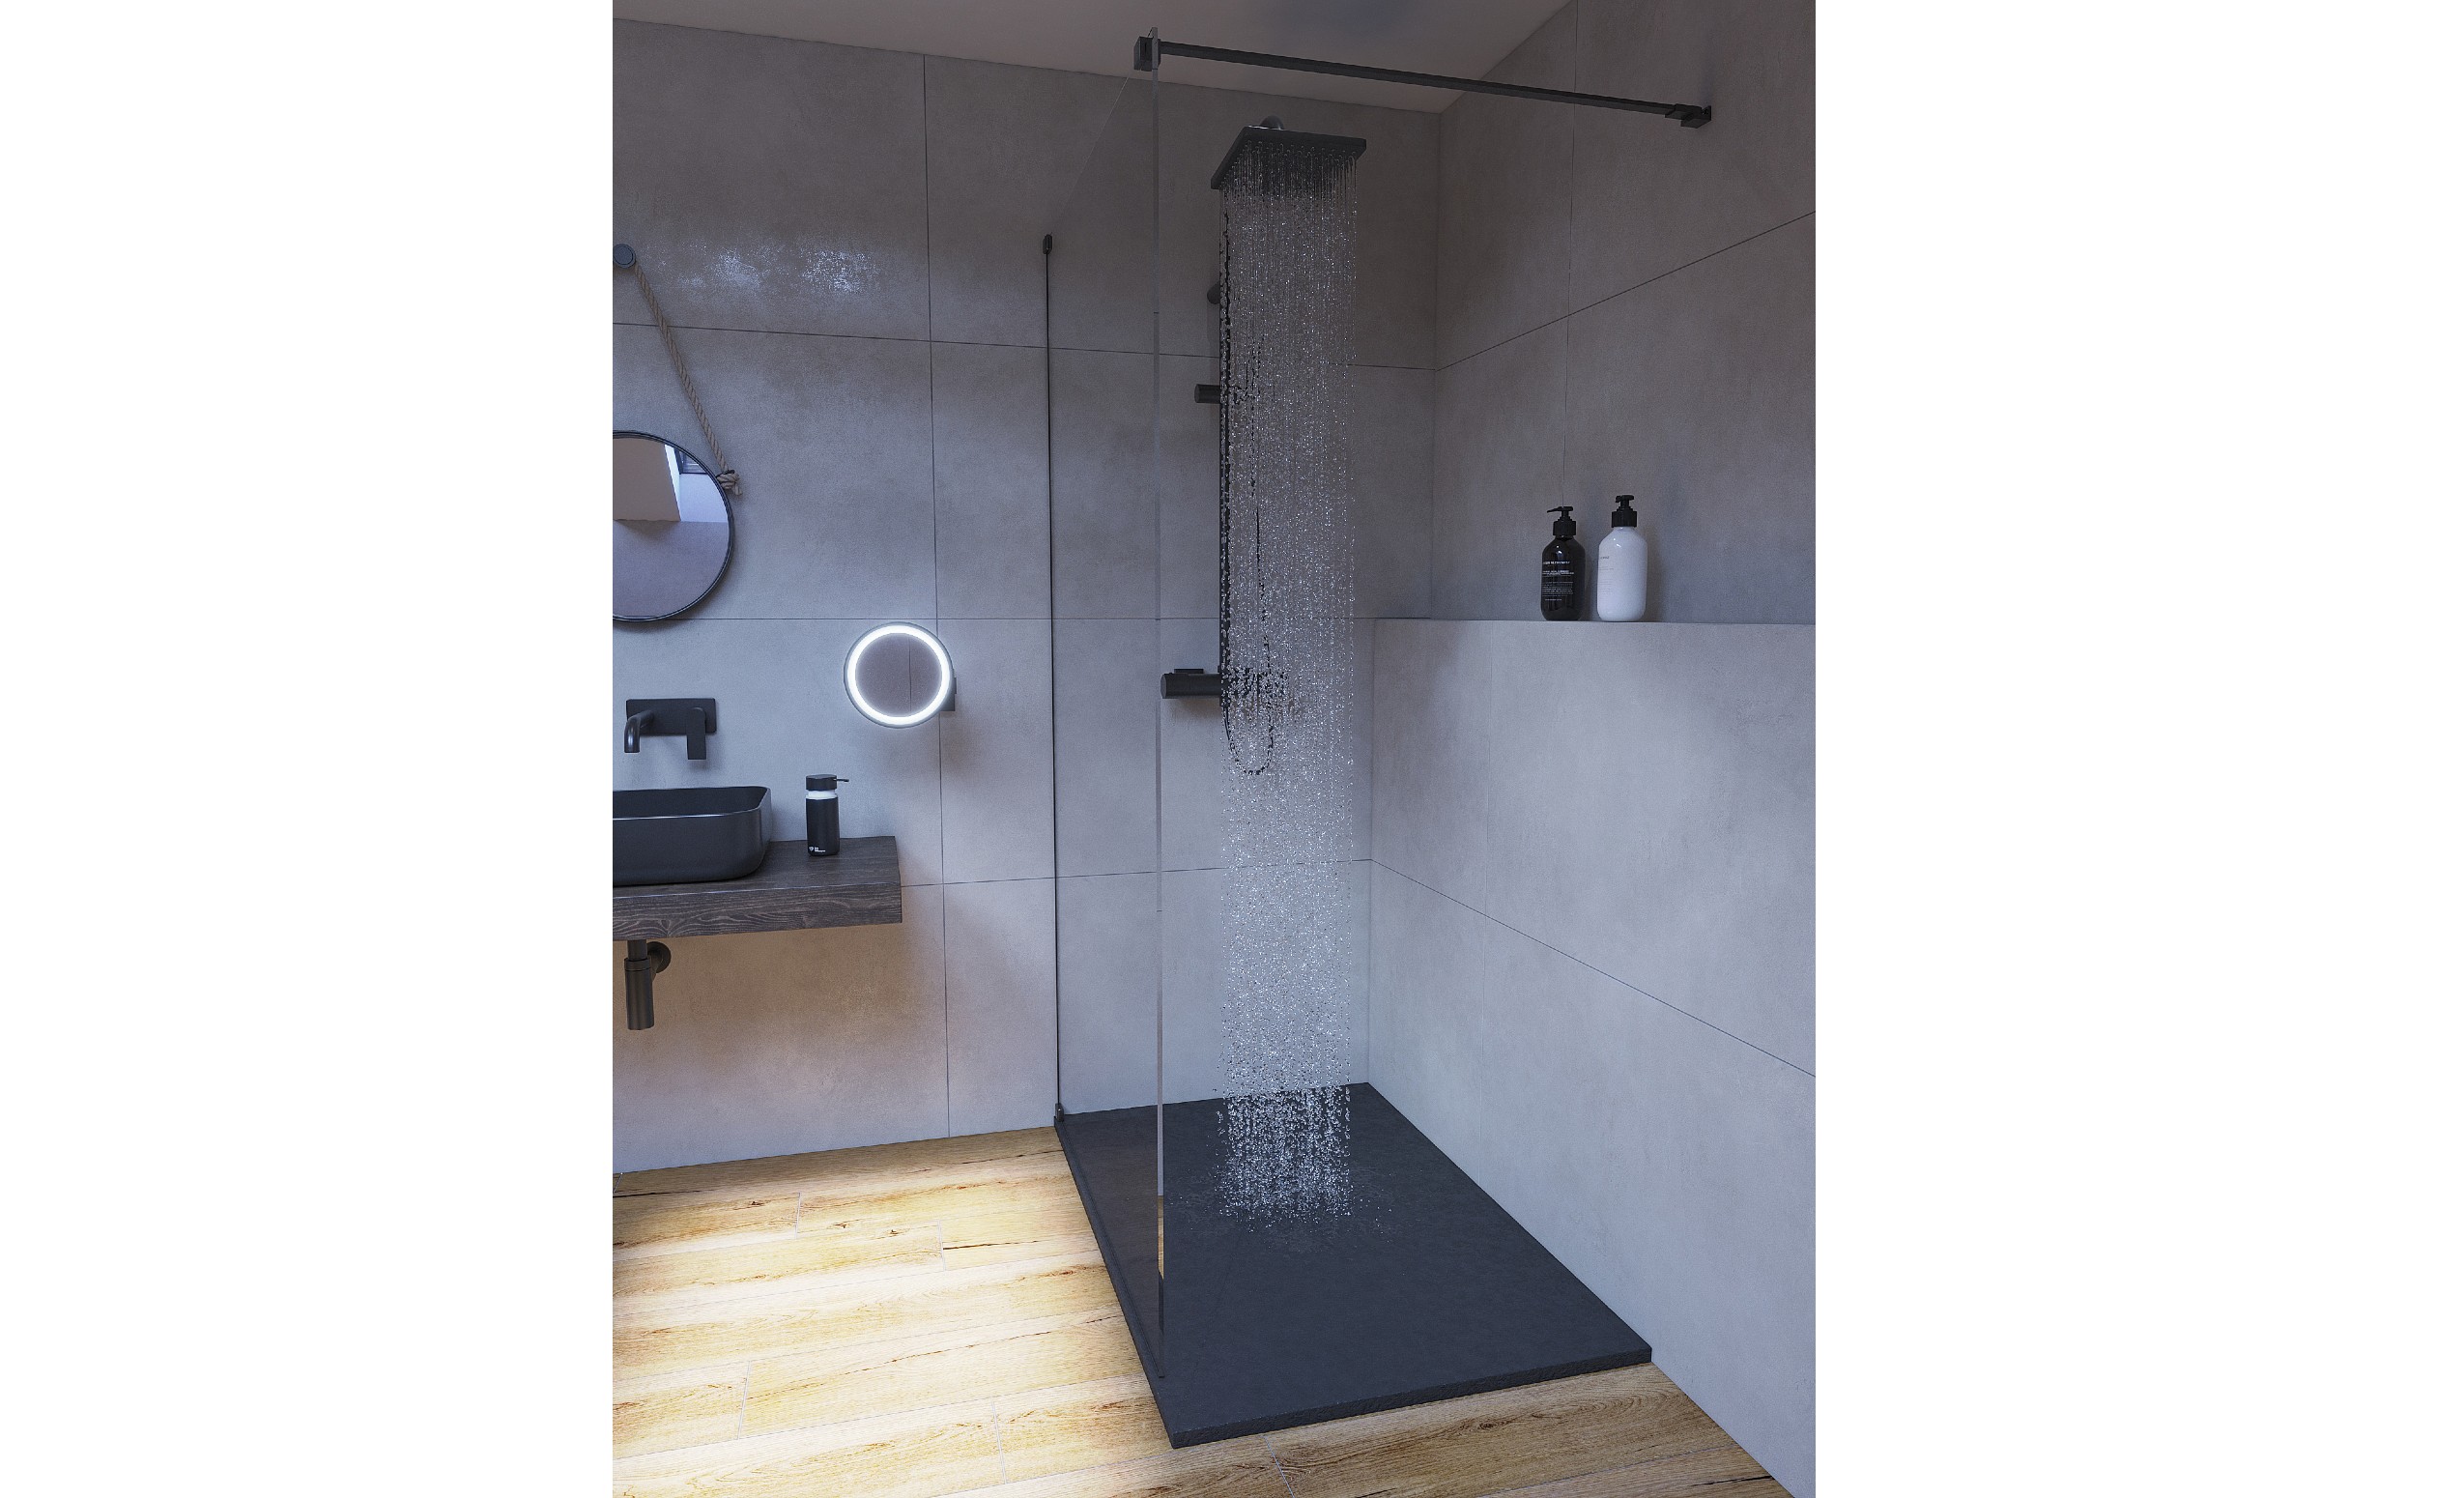 Podkrovni-koupelna-cerne-wc-a-umyvadlo-svetle-sede-obklady-drevena-podlaha-004.jpg